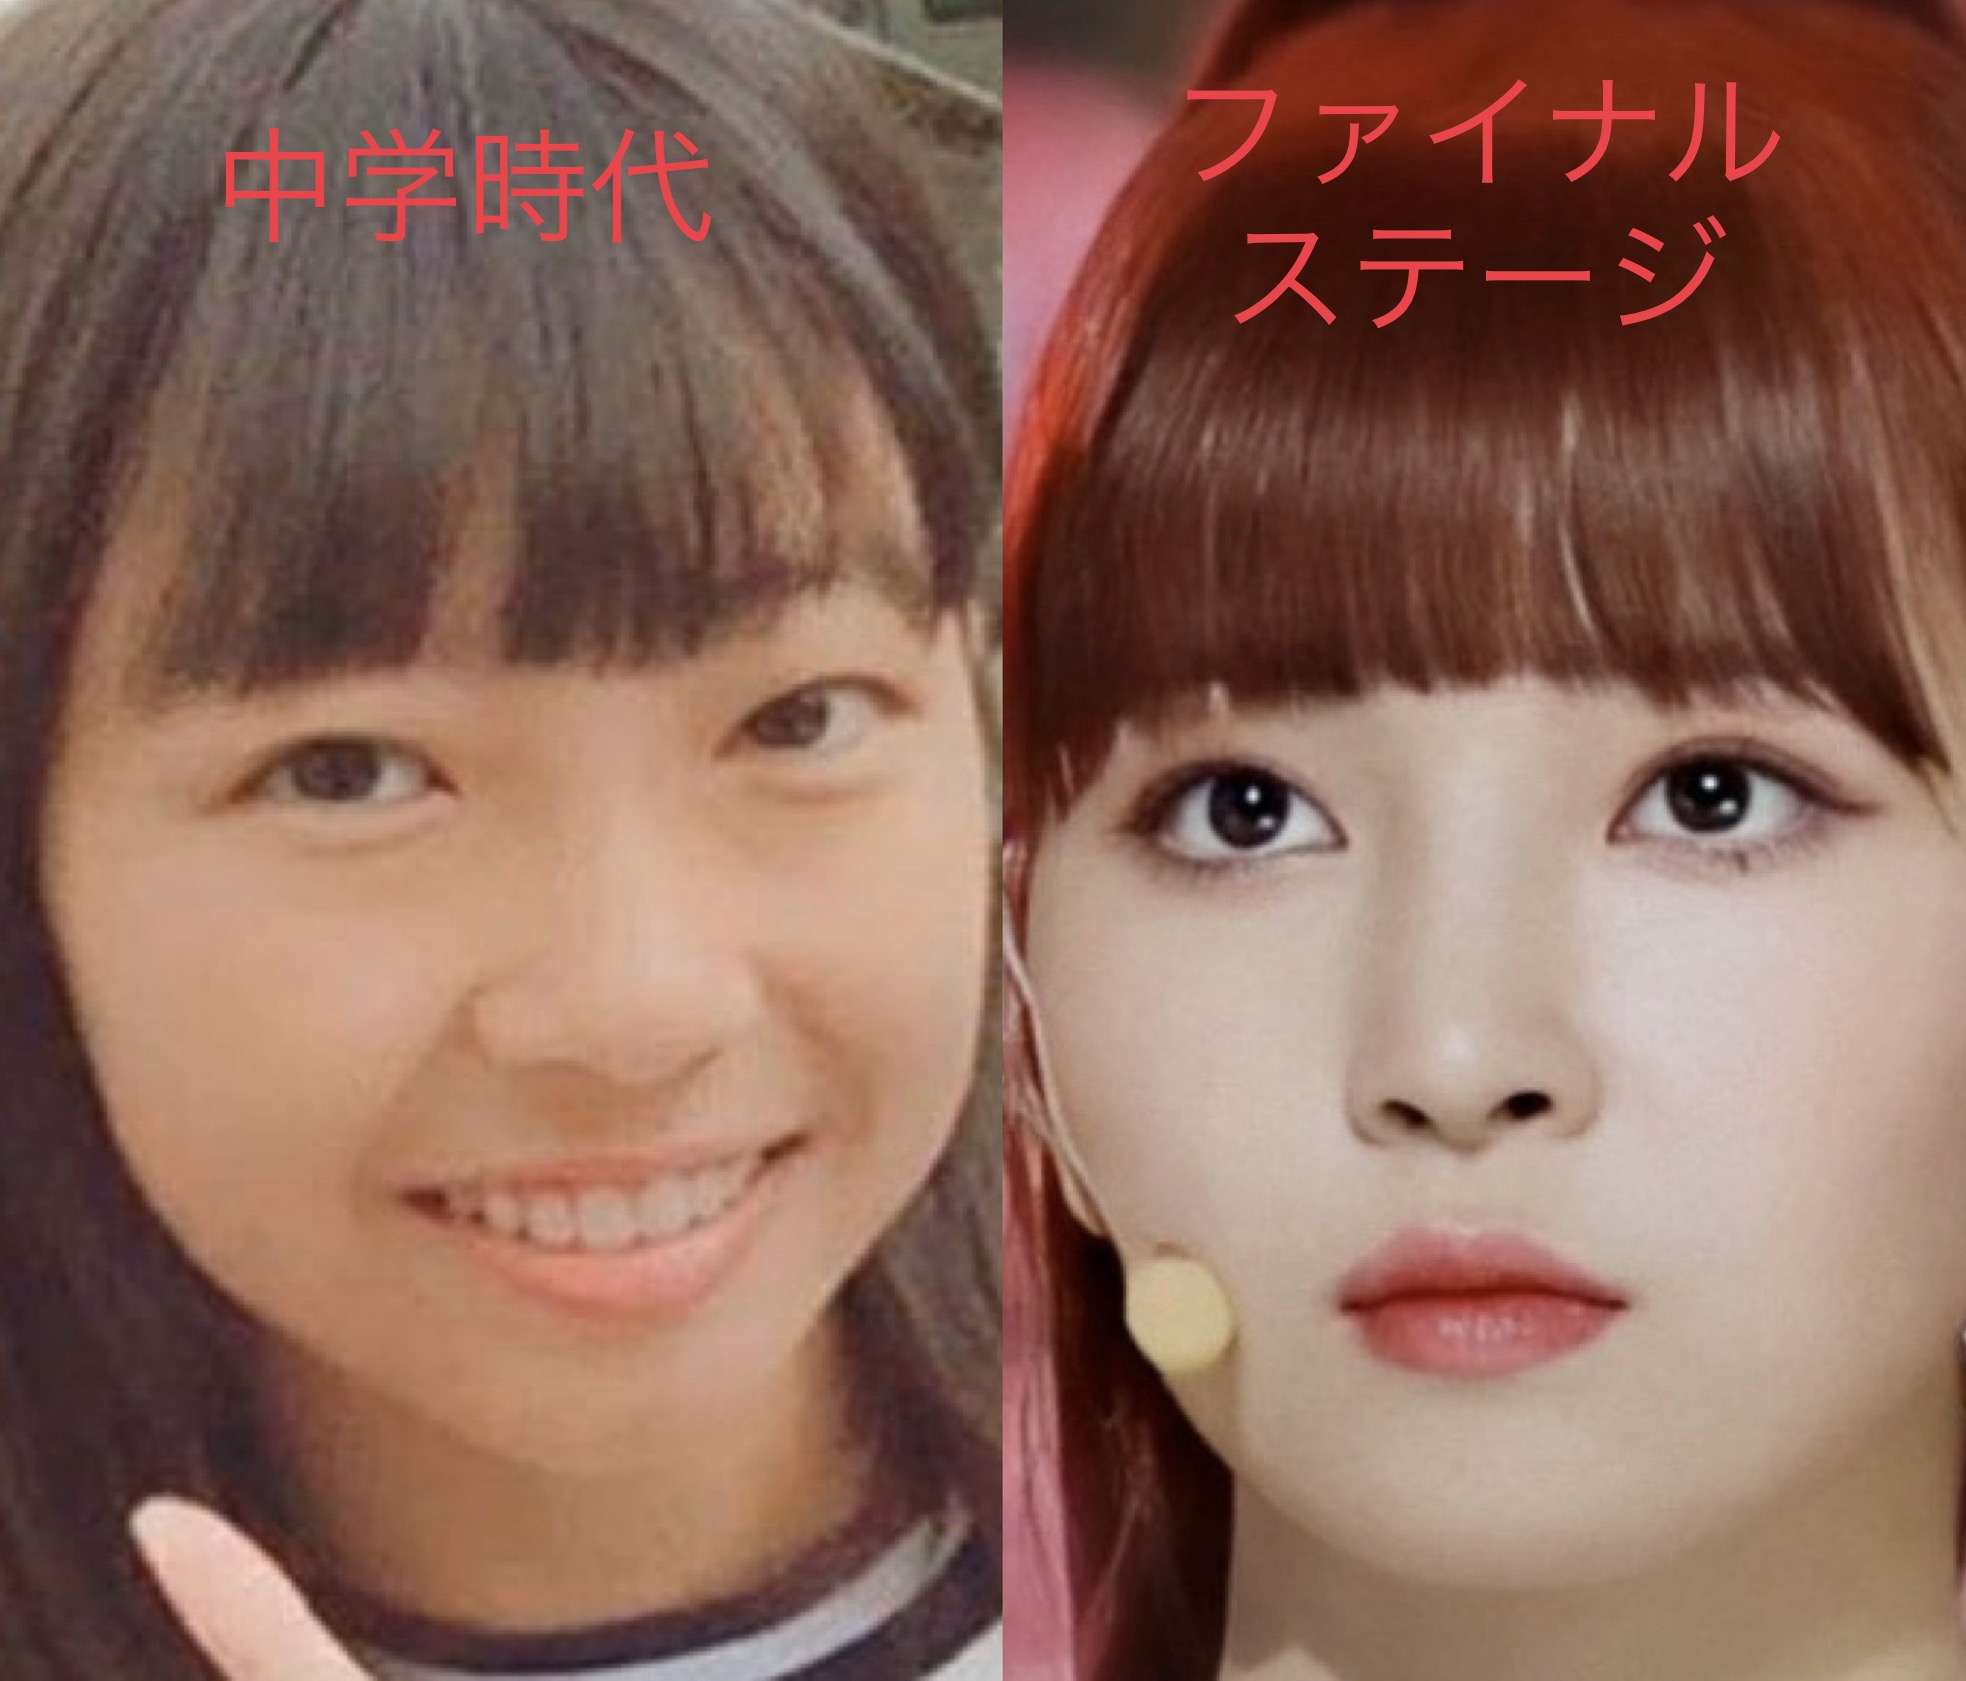 Niziuマユカは整形 昔と顔変わったか画像比較 垢抜けた理由を調査 Sukima